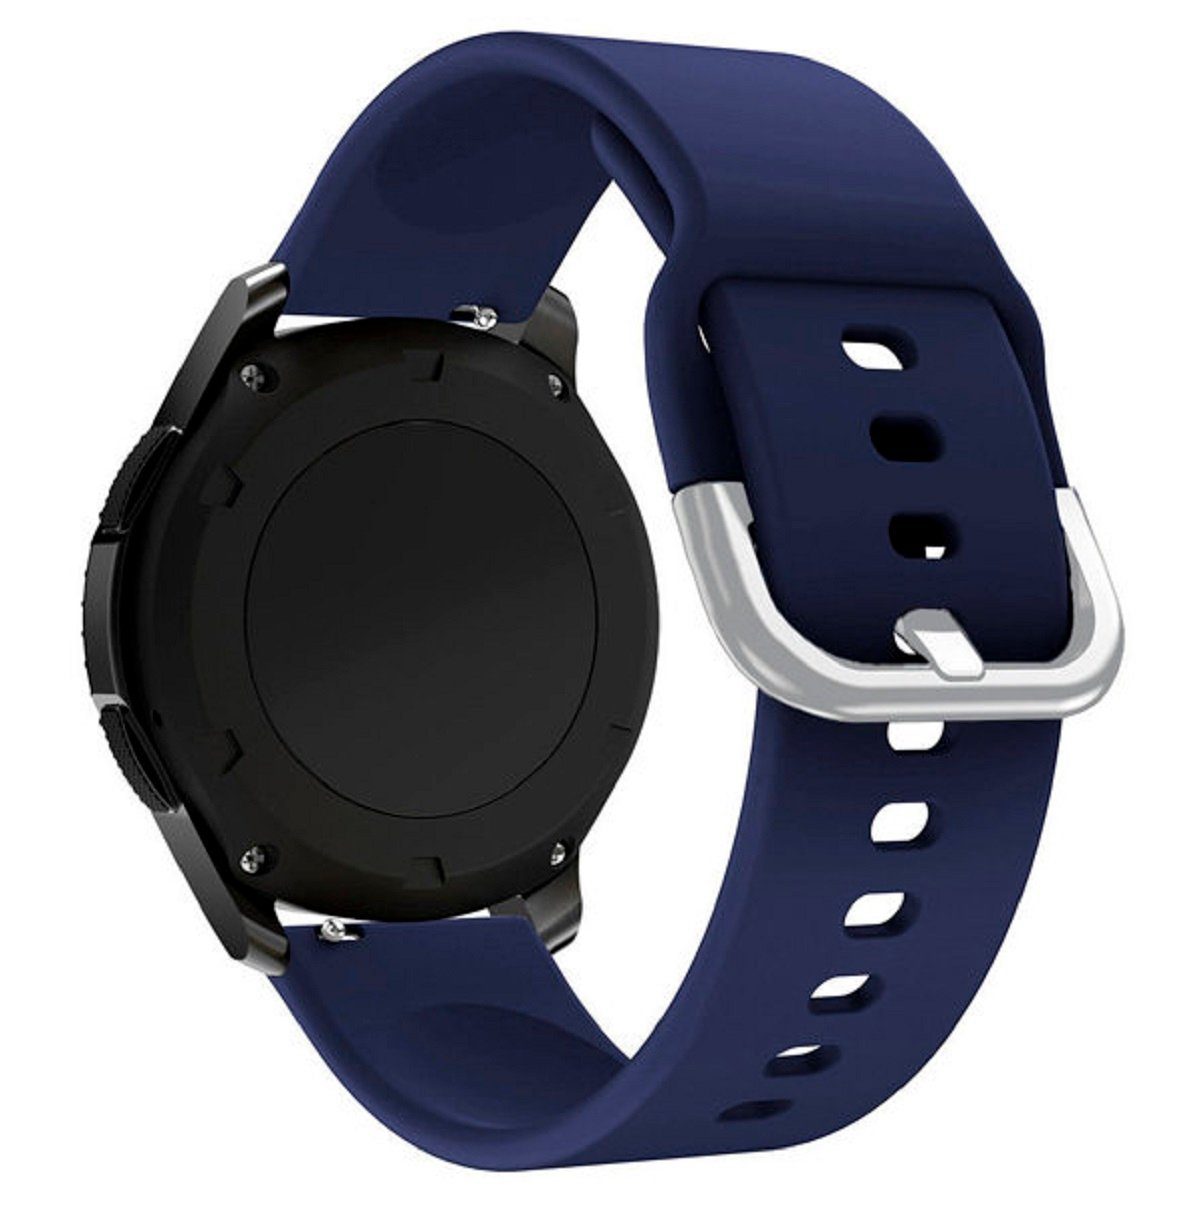 Hurtel Uhrenarmband Silikonarmband Ersatz Smartwatch-Armband universal 22mm Breite Dunkelblau